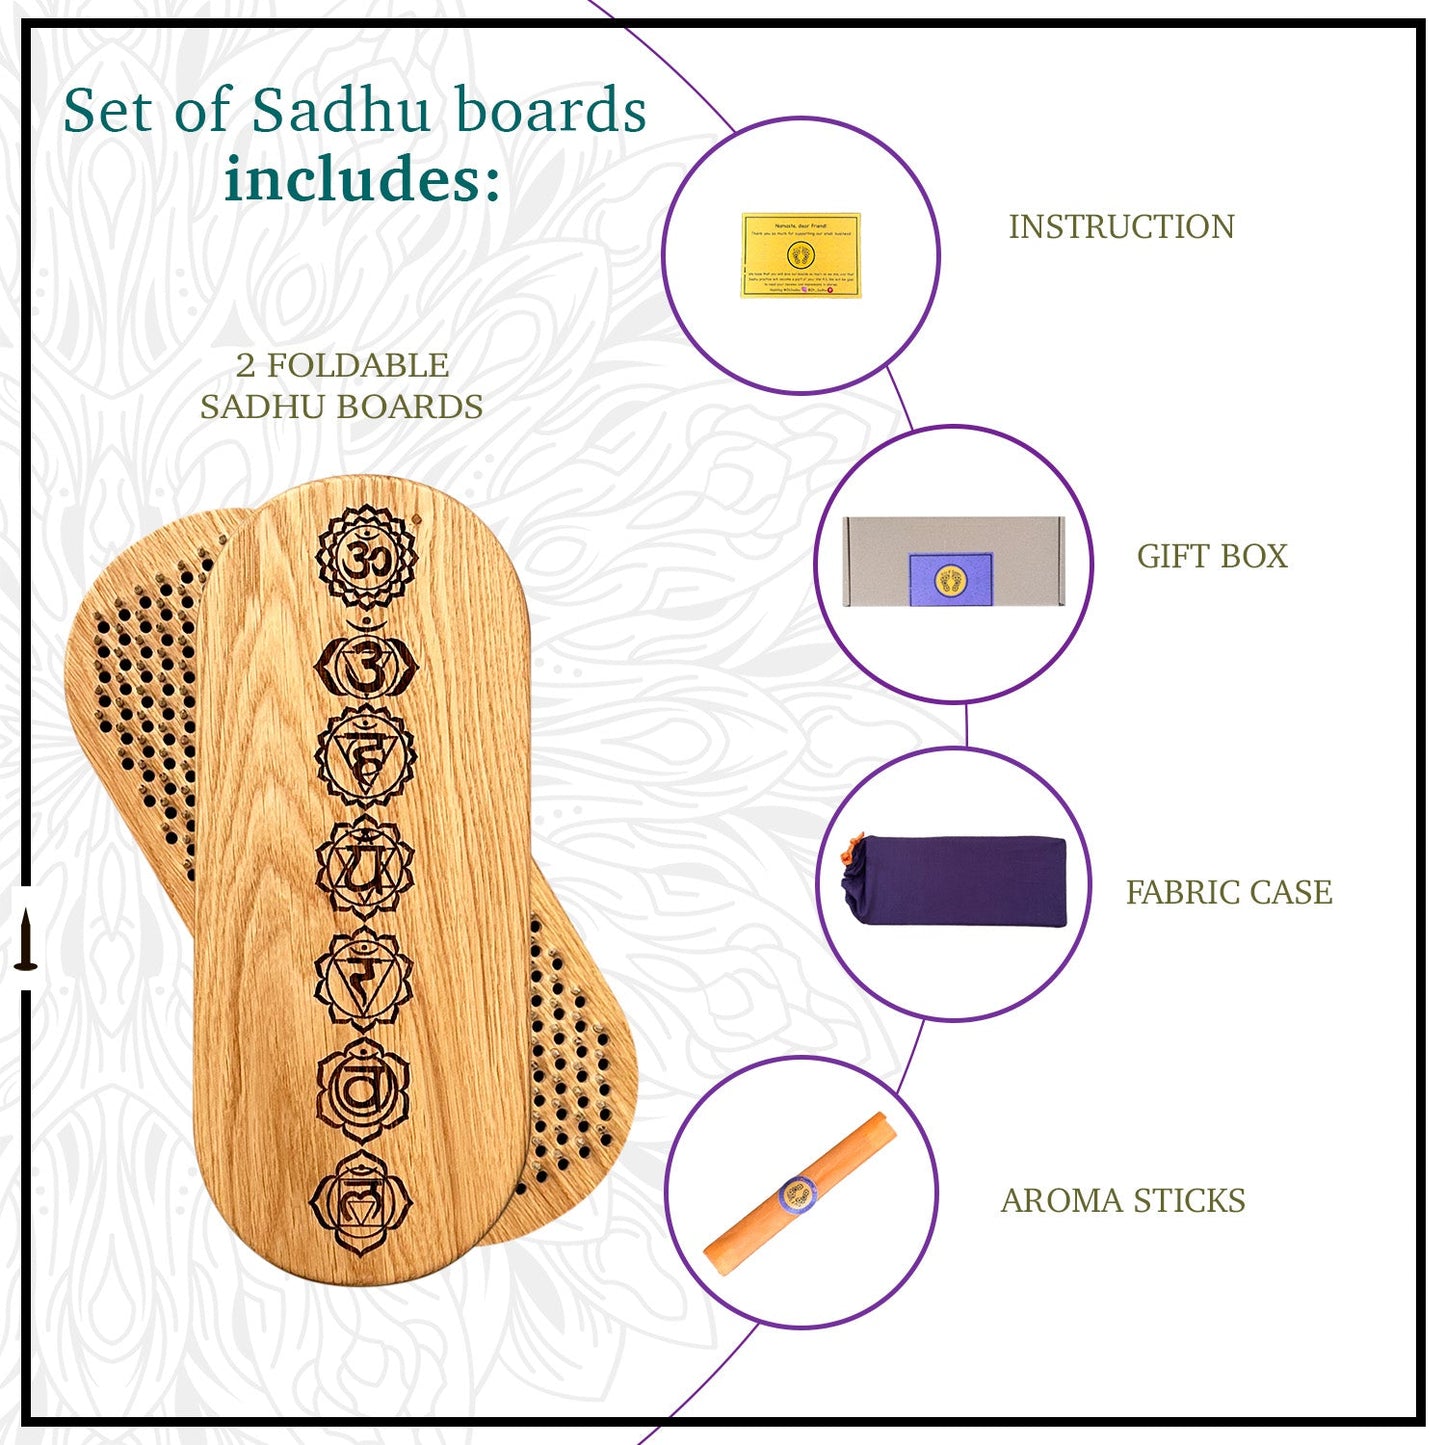 Set of Oh! Sadhu boards includes 2 sadhu board, case, box, aroma sticks, instruction